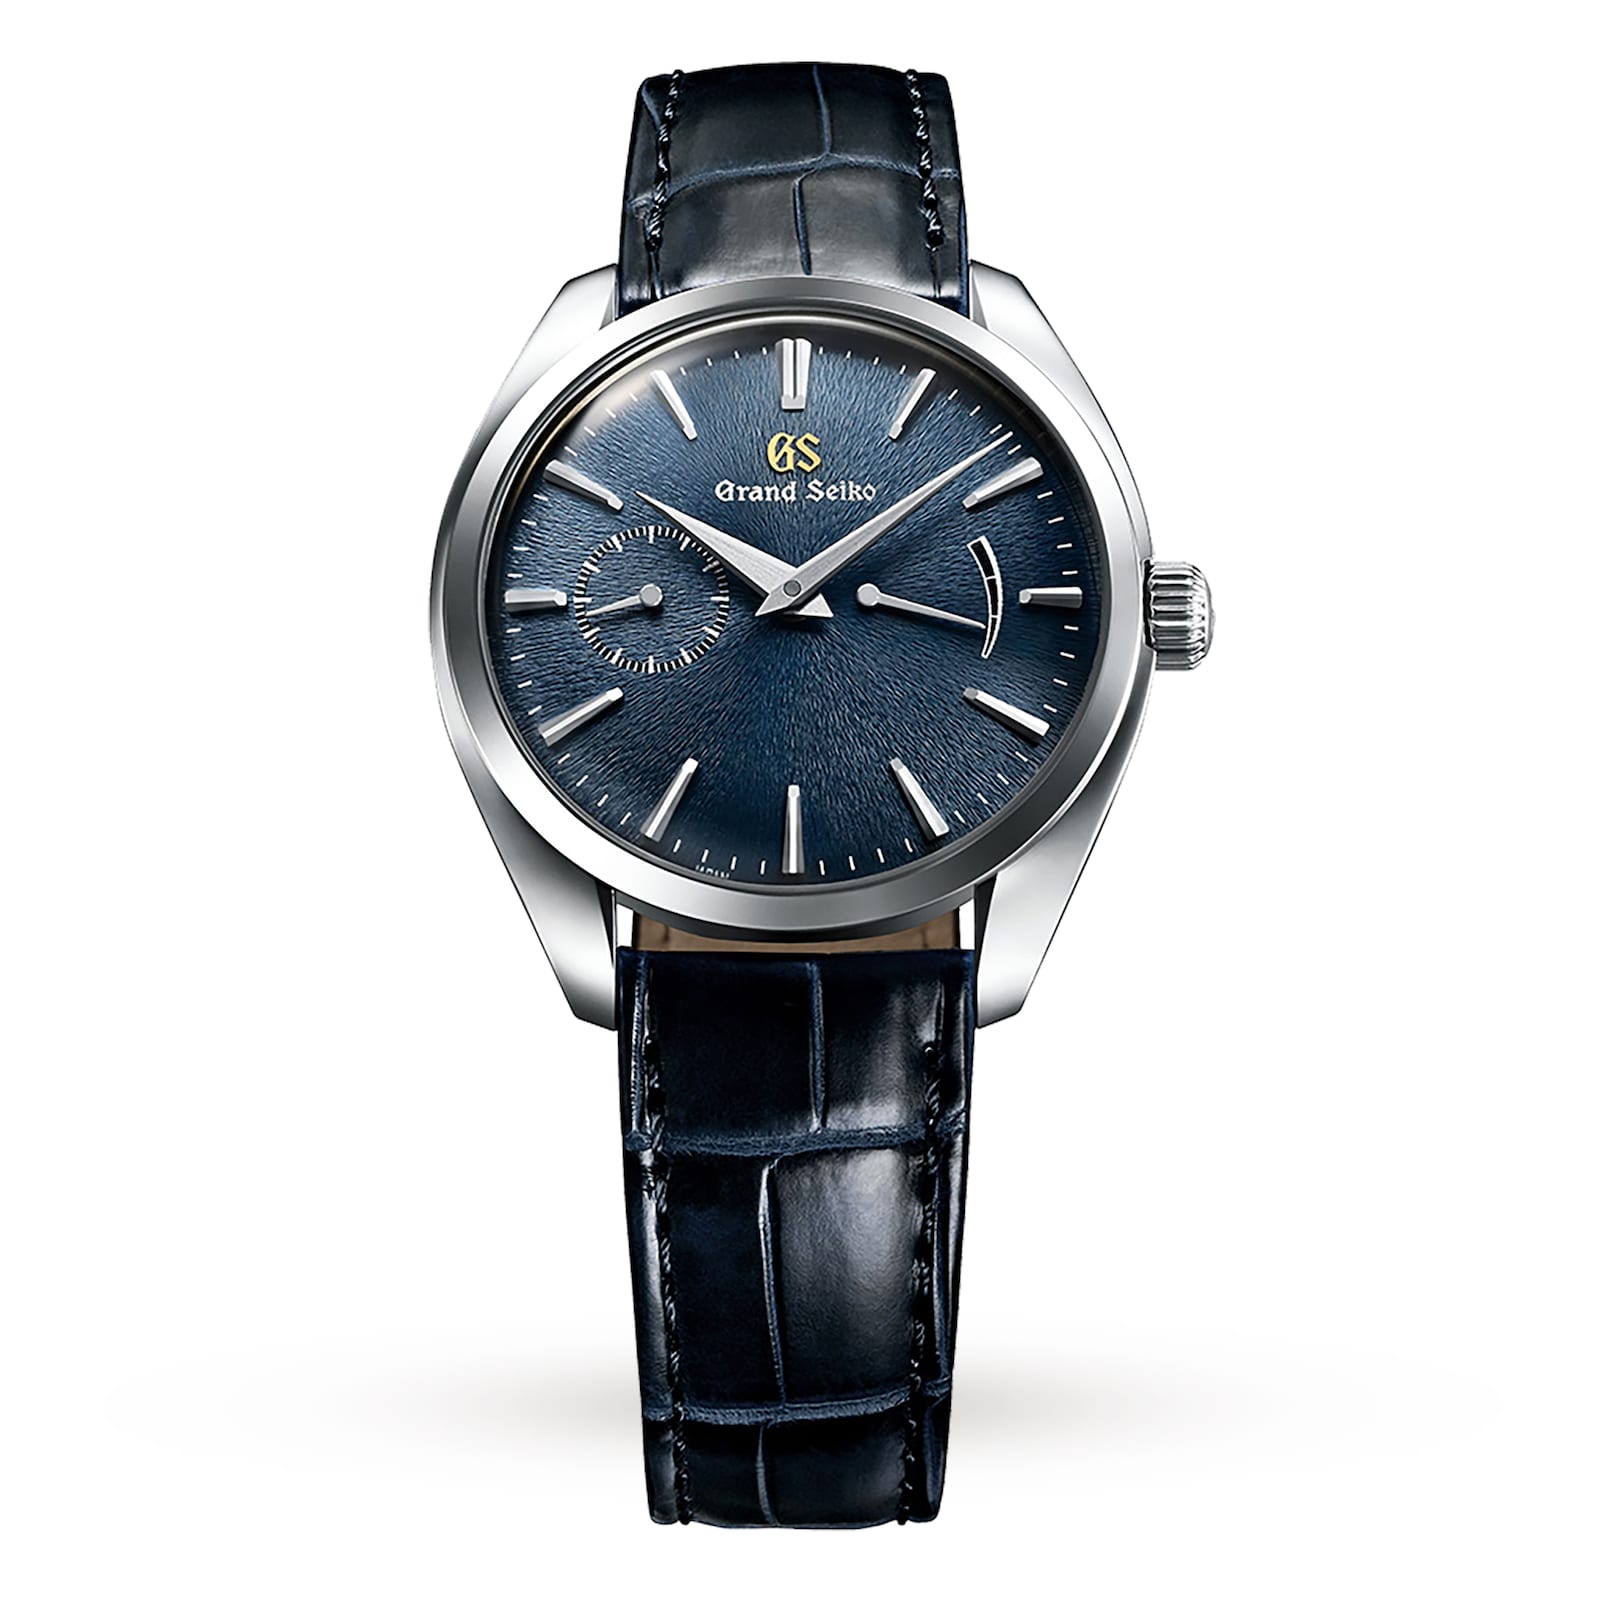 Grand Seiko Elegance Limited Edition SBGK005 | Watches Of Switzerland UK